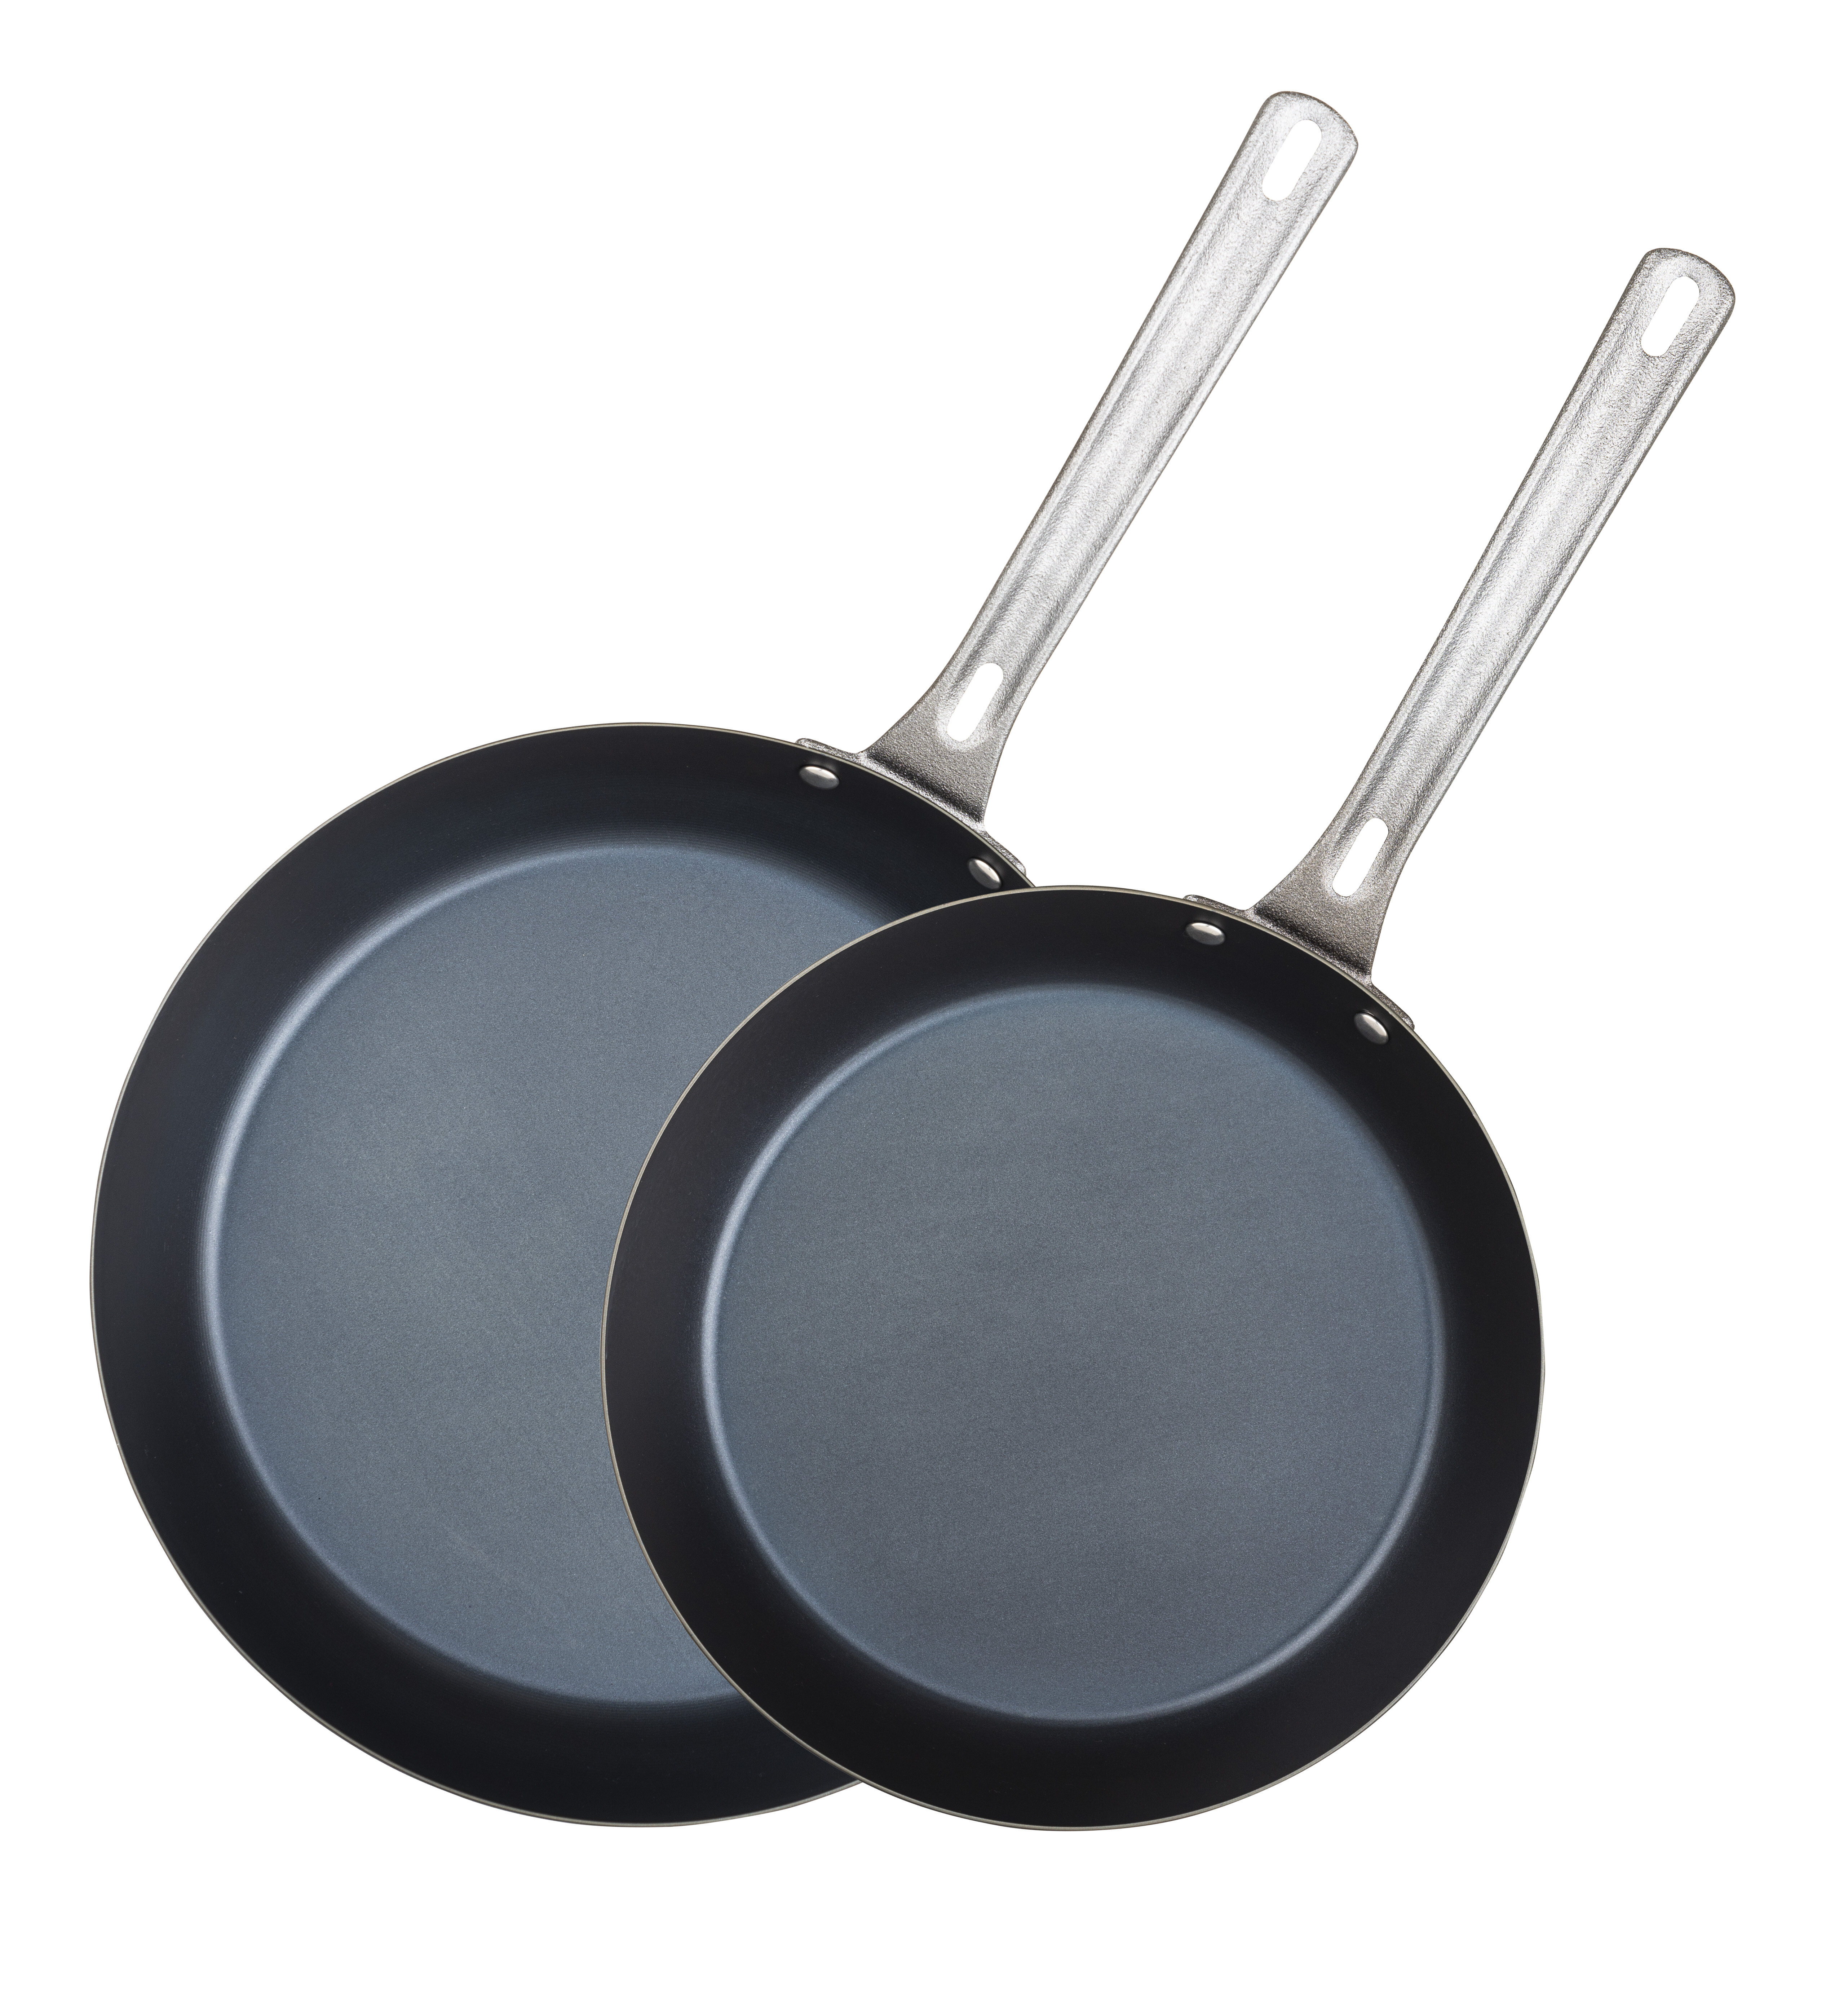 Blue Carbon Steel ACCESS Fry Pan